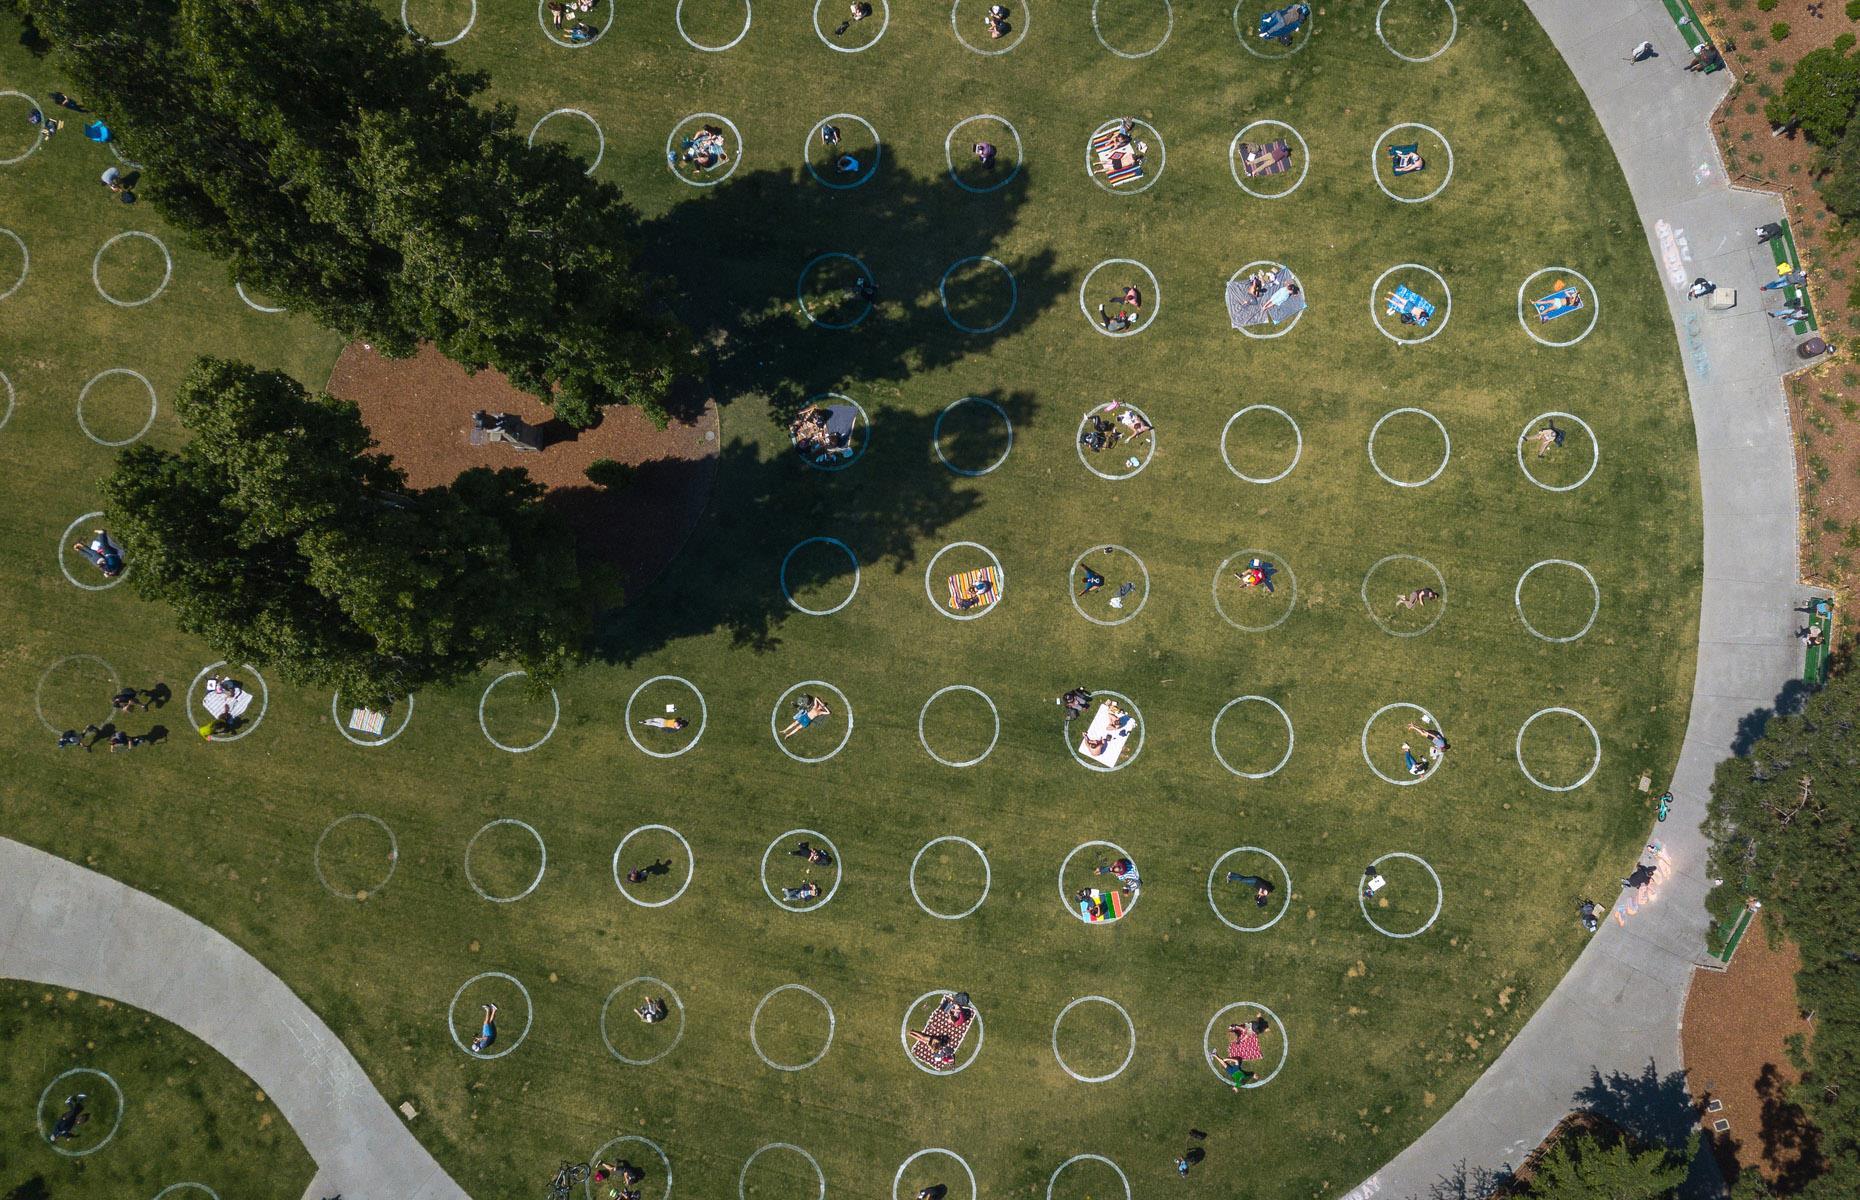 Toronto, Canada: Parks with social distancing circles